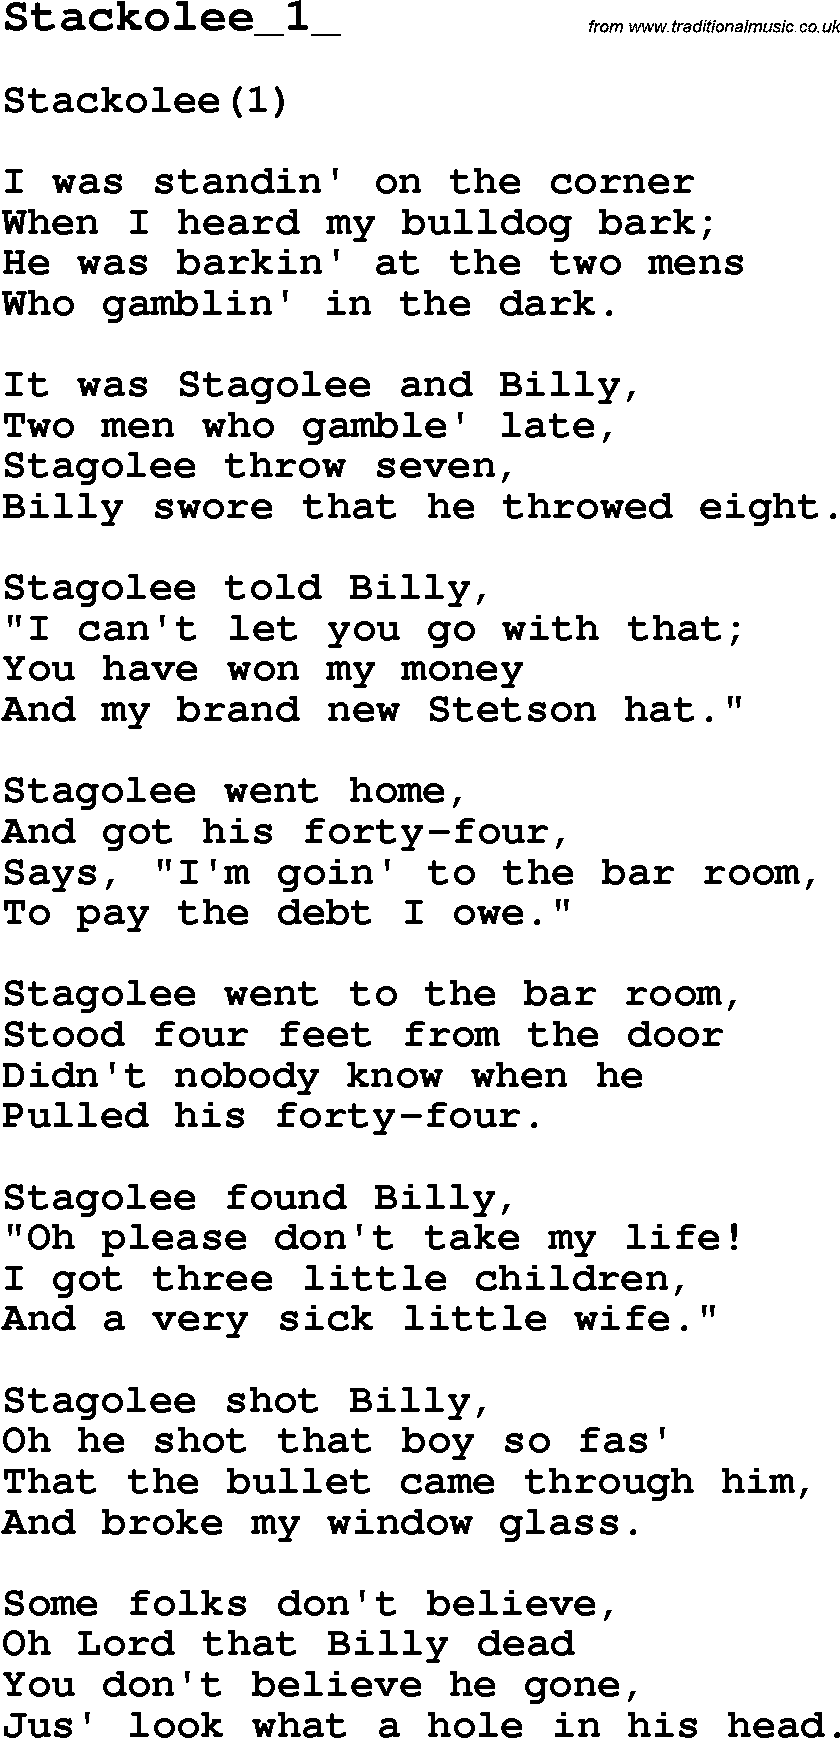 Skiffle Song Lyrics for Stackolee 1 .